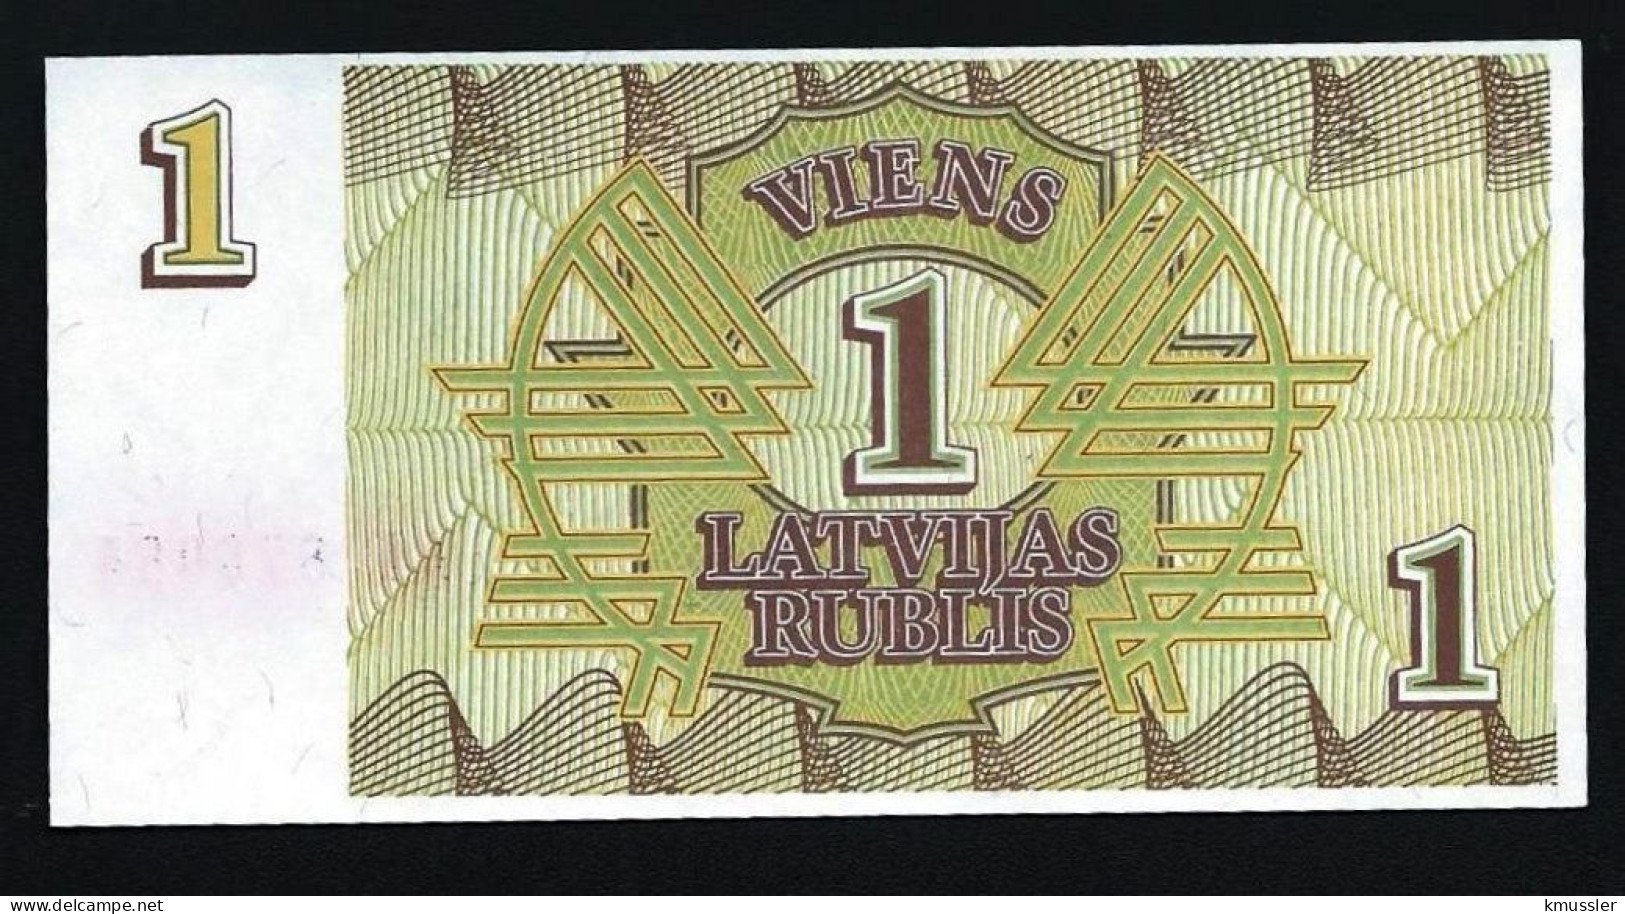 # # # Banknote Lettland (Latvijas) 1 Rubel (Rublis) 1992 UNC # # # - Letland